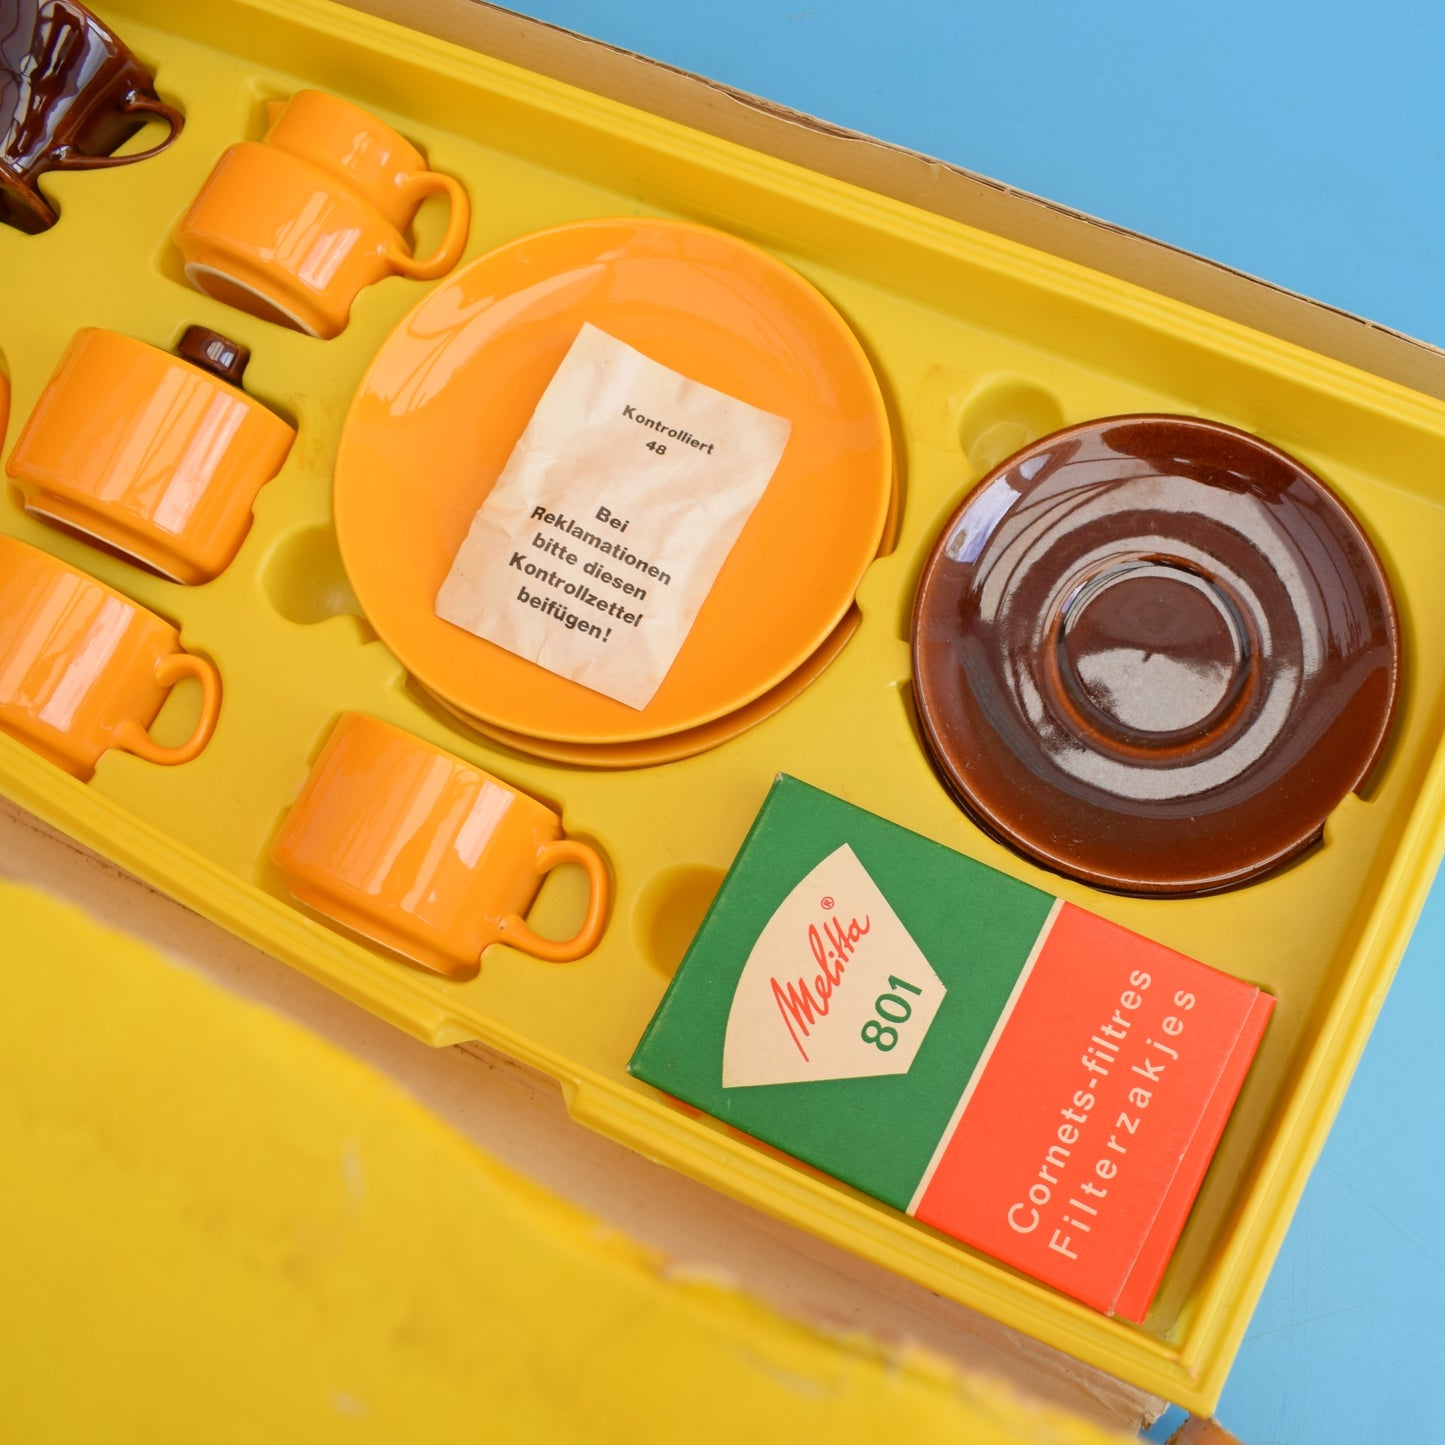 Vintage 1970s German Childs Coffee Set - Boxed